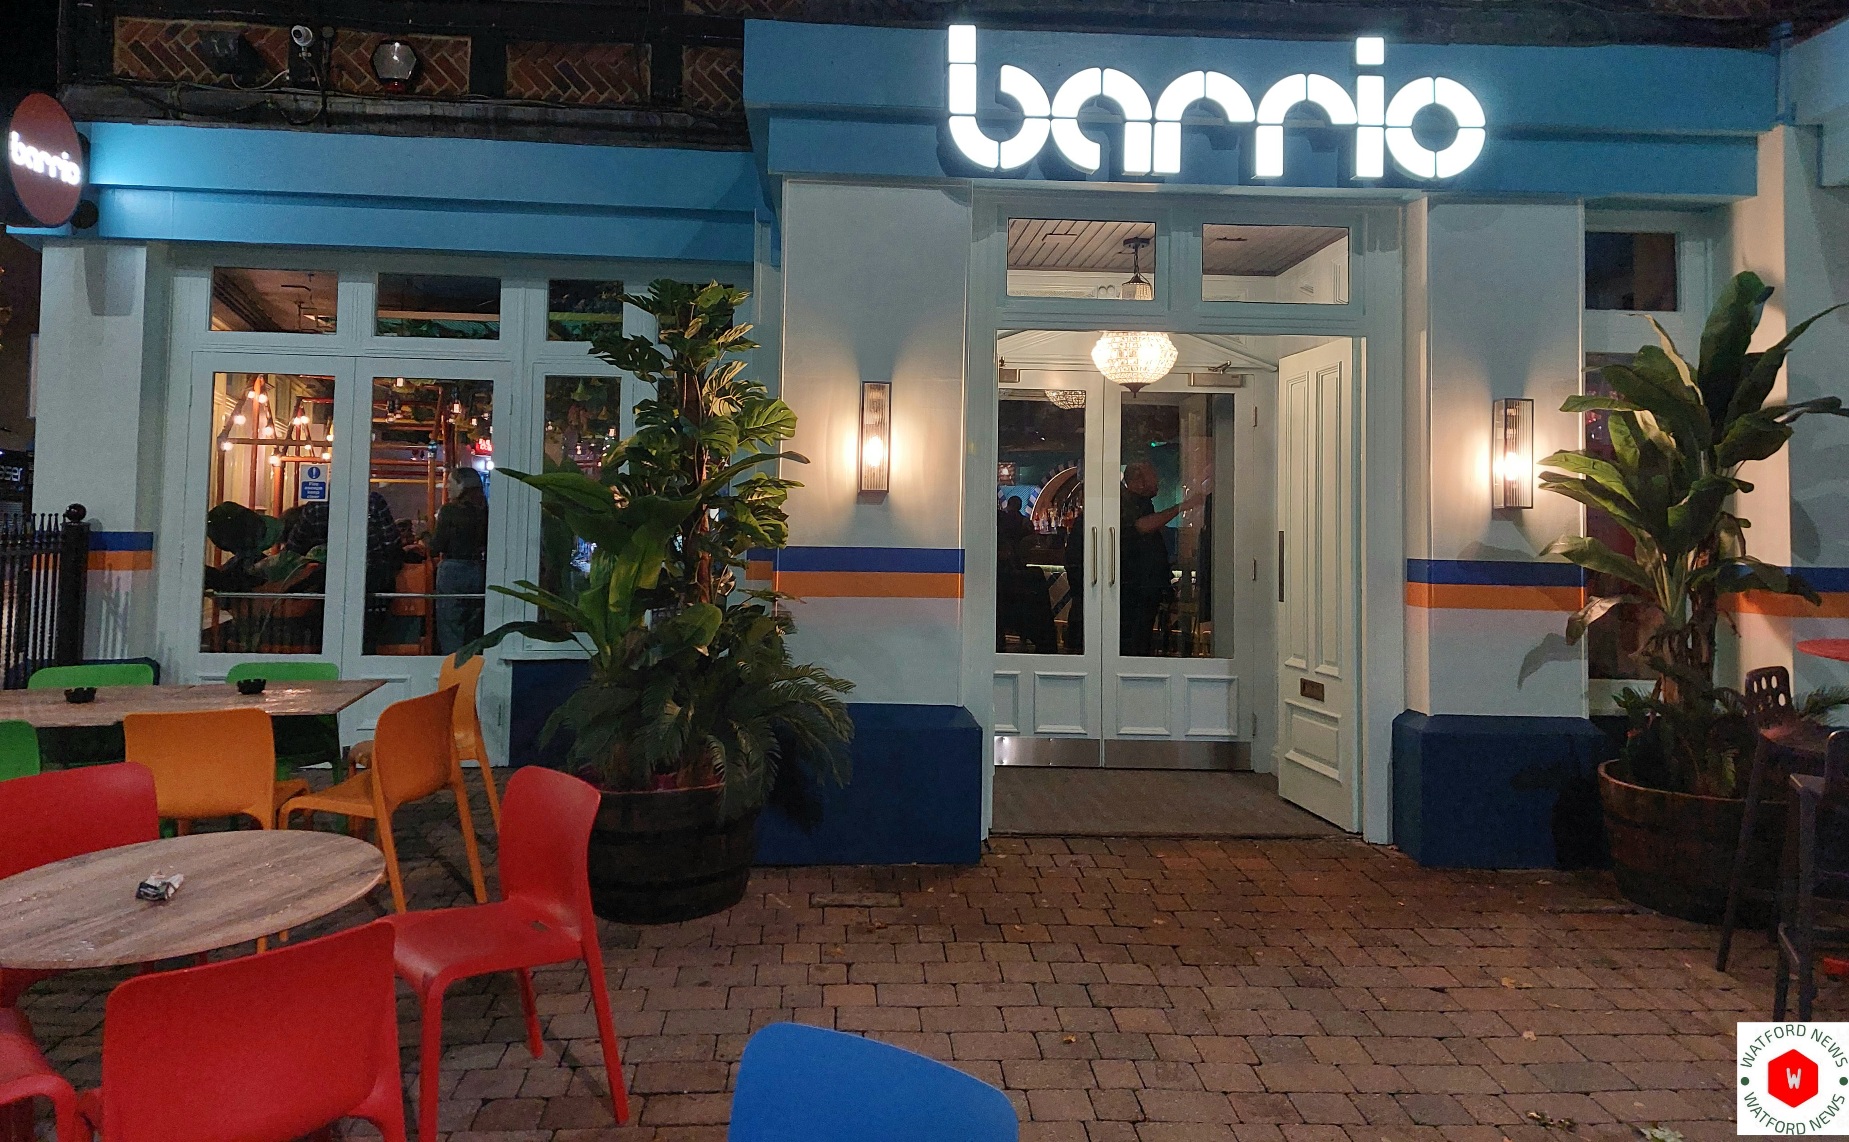 Barrio Bar, Watford